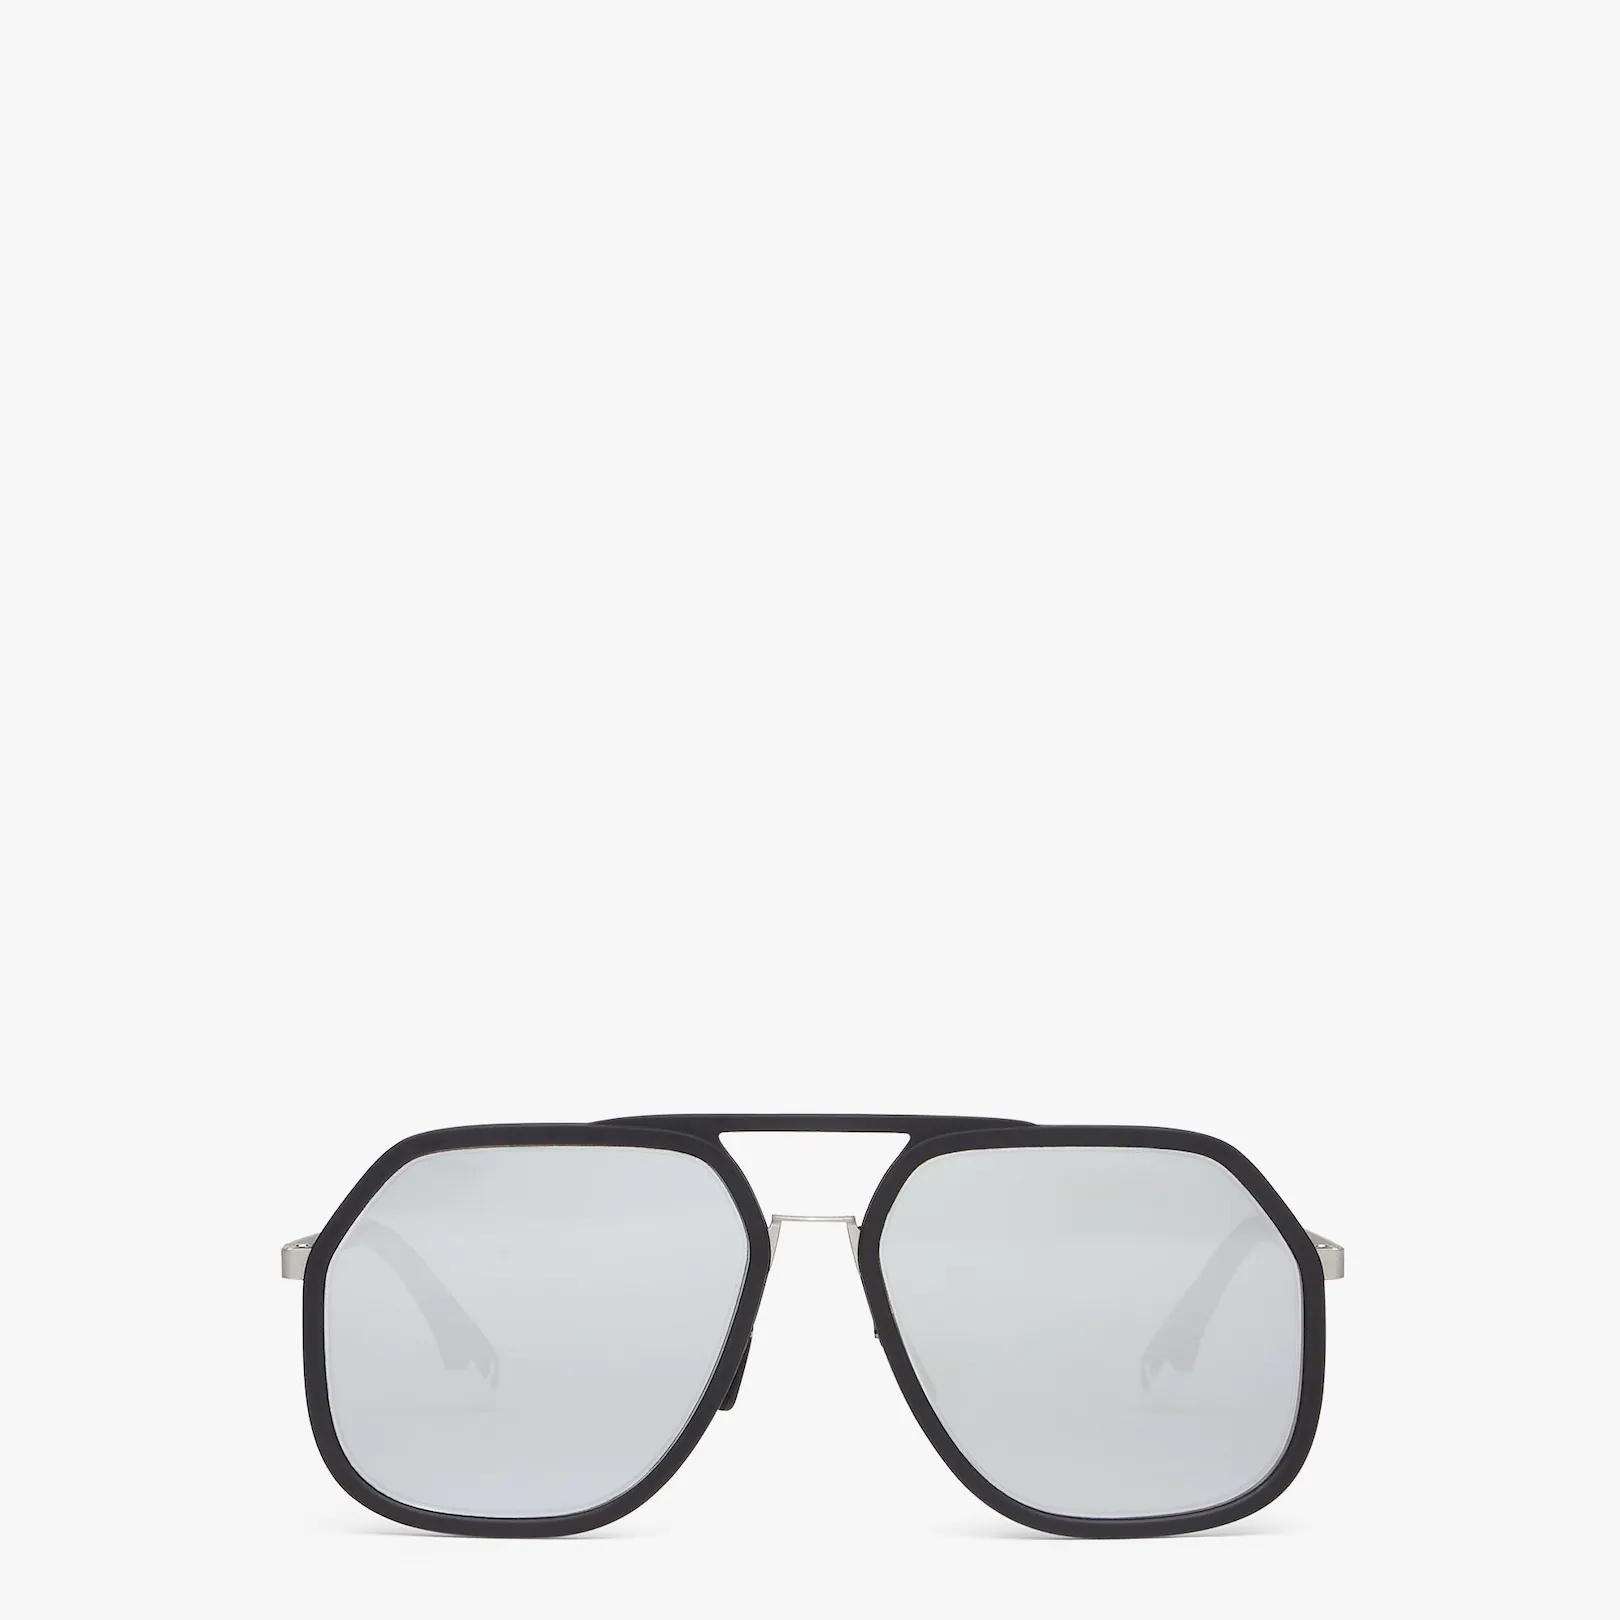 Black sunglasses - 1